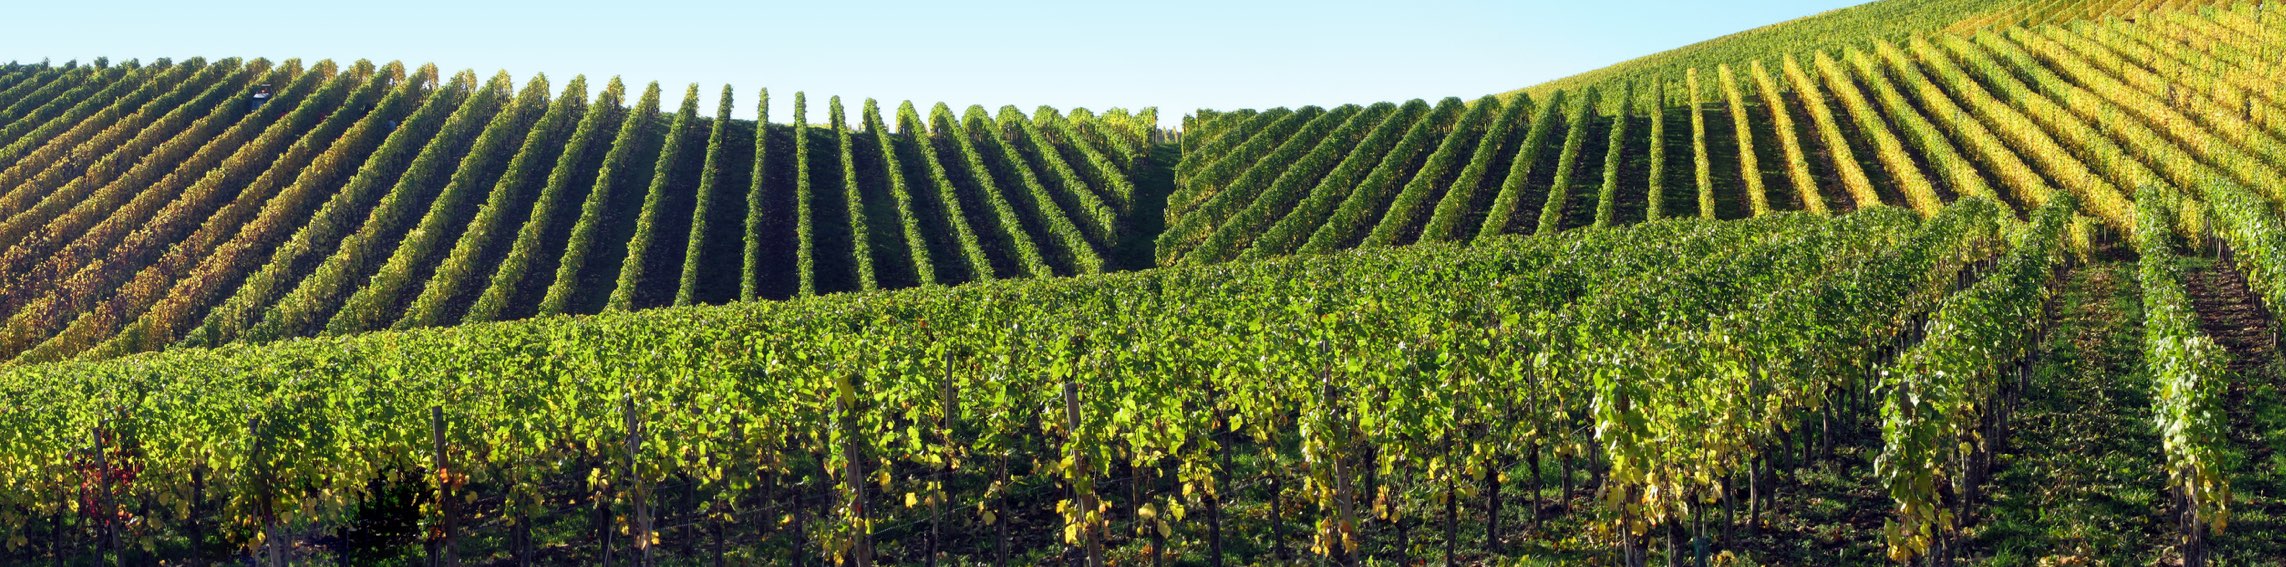 Vignes_appellations_vin